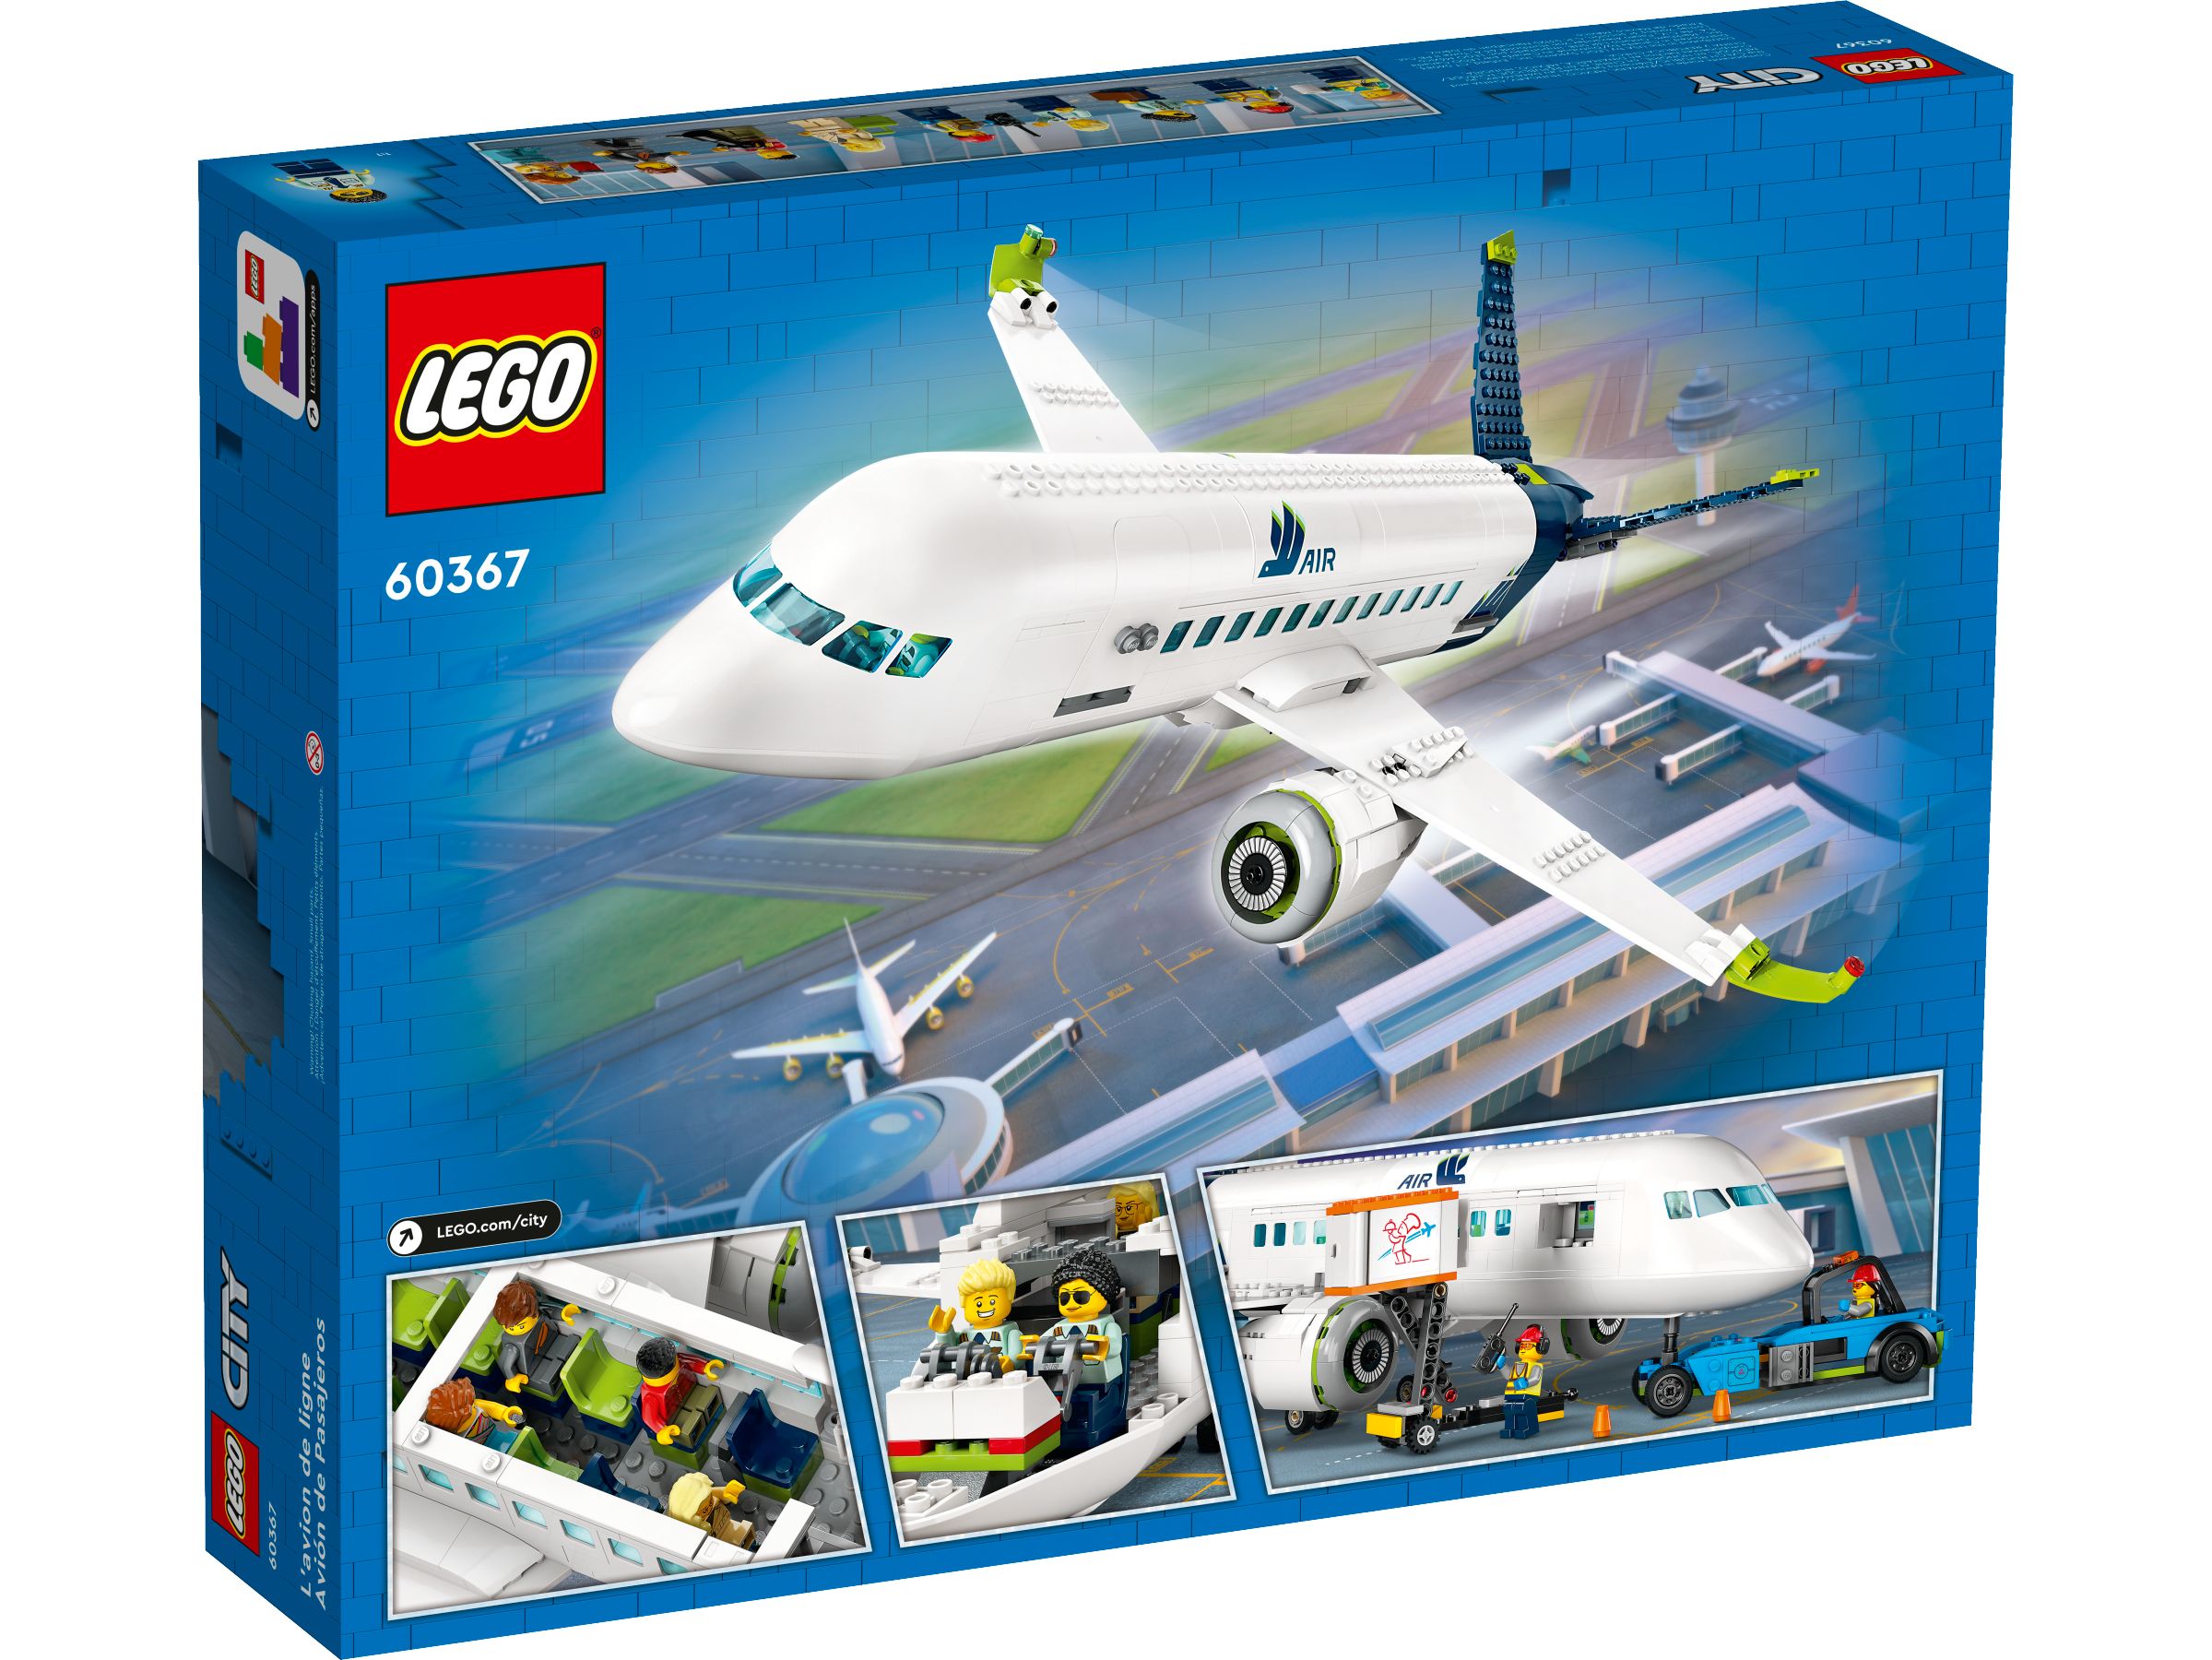 LEGO City 60367 Passagierflugzeug LEGO_60367_alt2.jpg